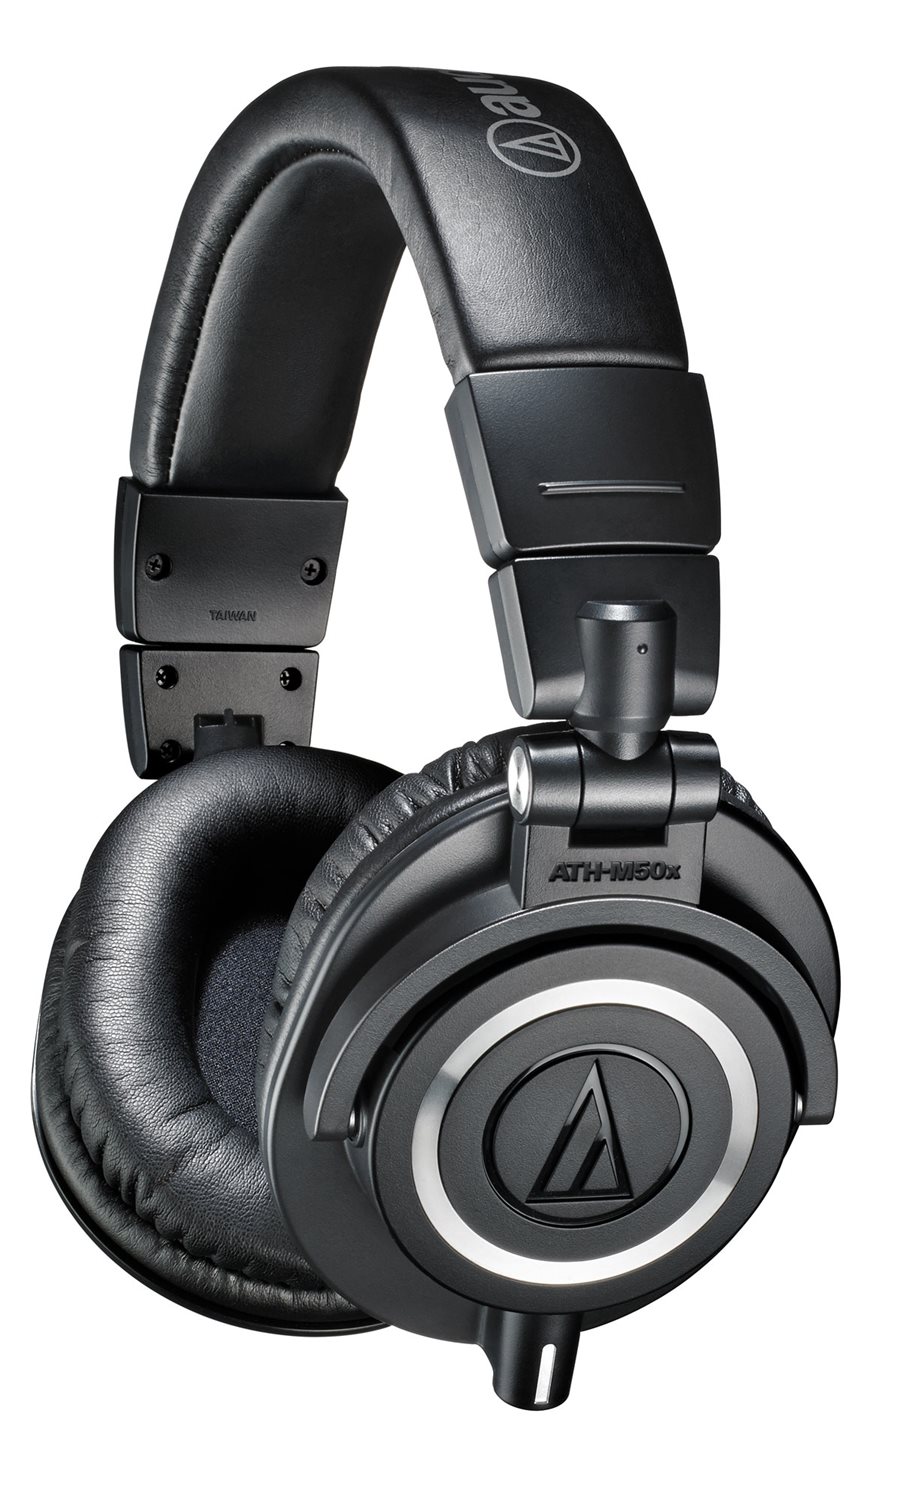 Audio-Technica ATH-M50x Professional Studio Monitor Headphones Detachable Cable 1018054 Black Friday Digital DJ Gear